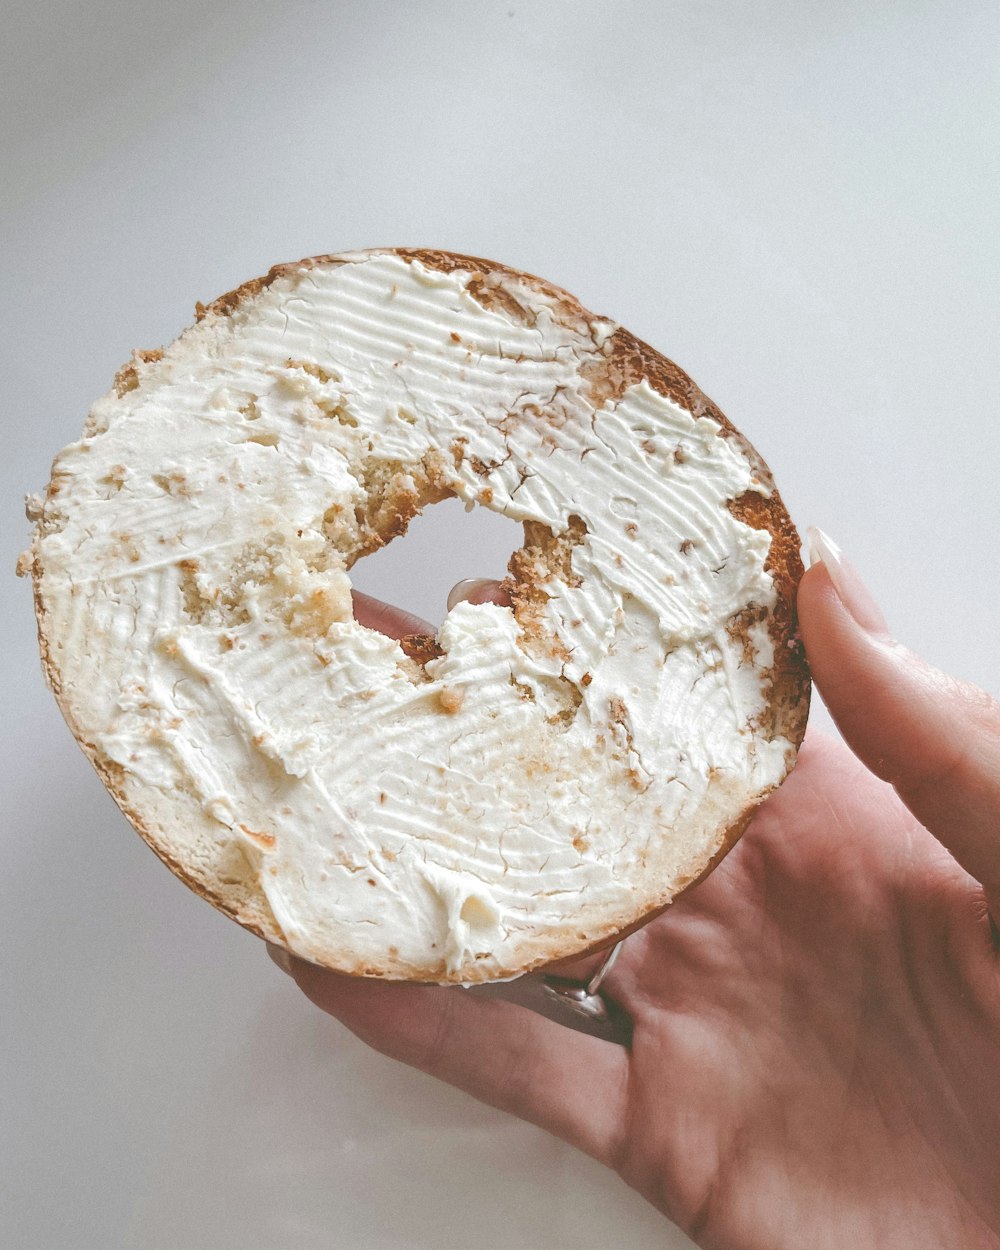 person holding white bread with white cream